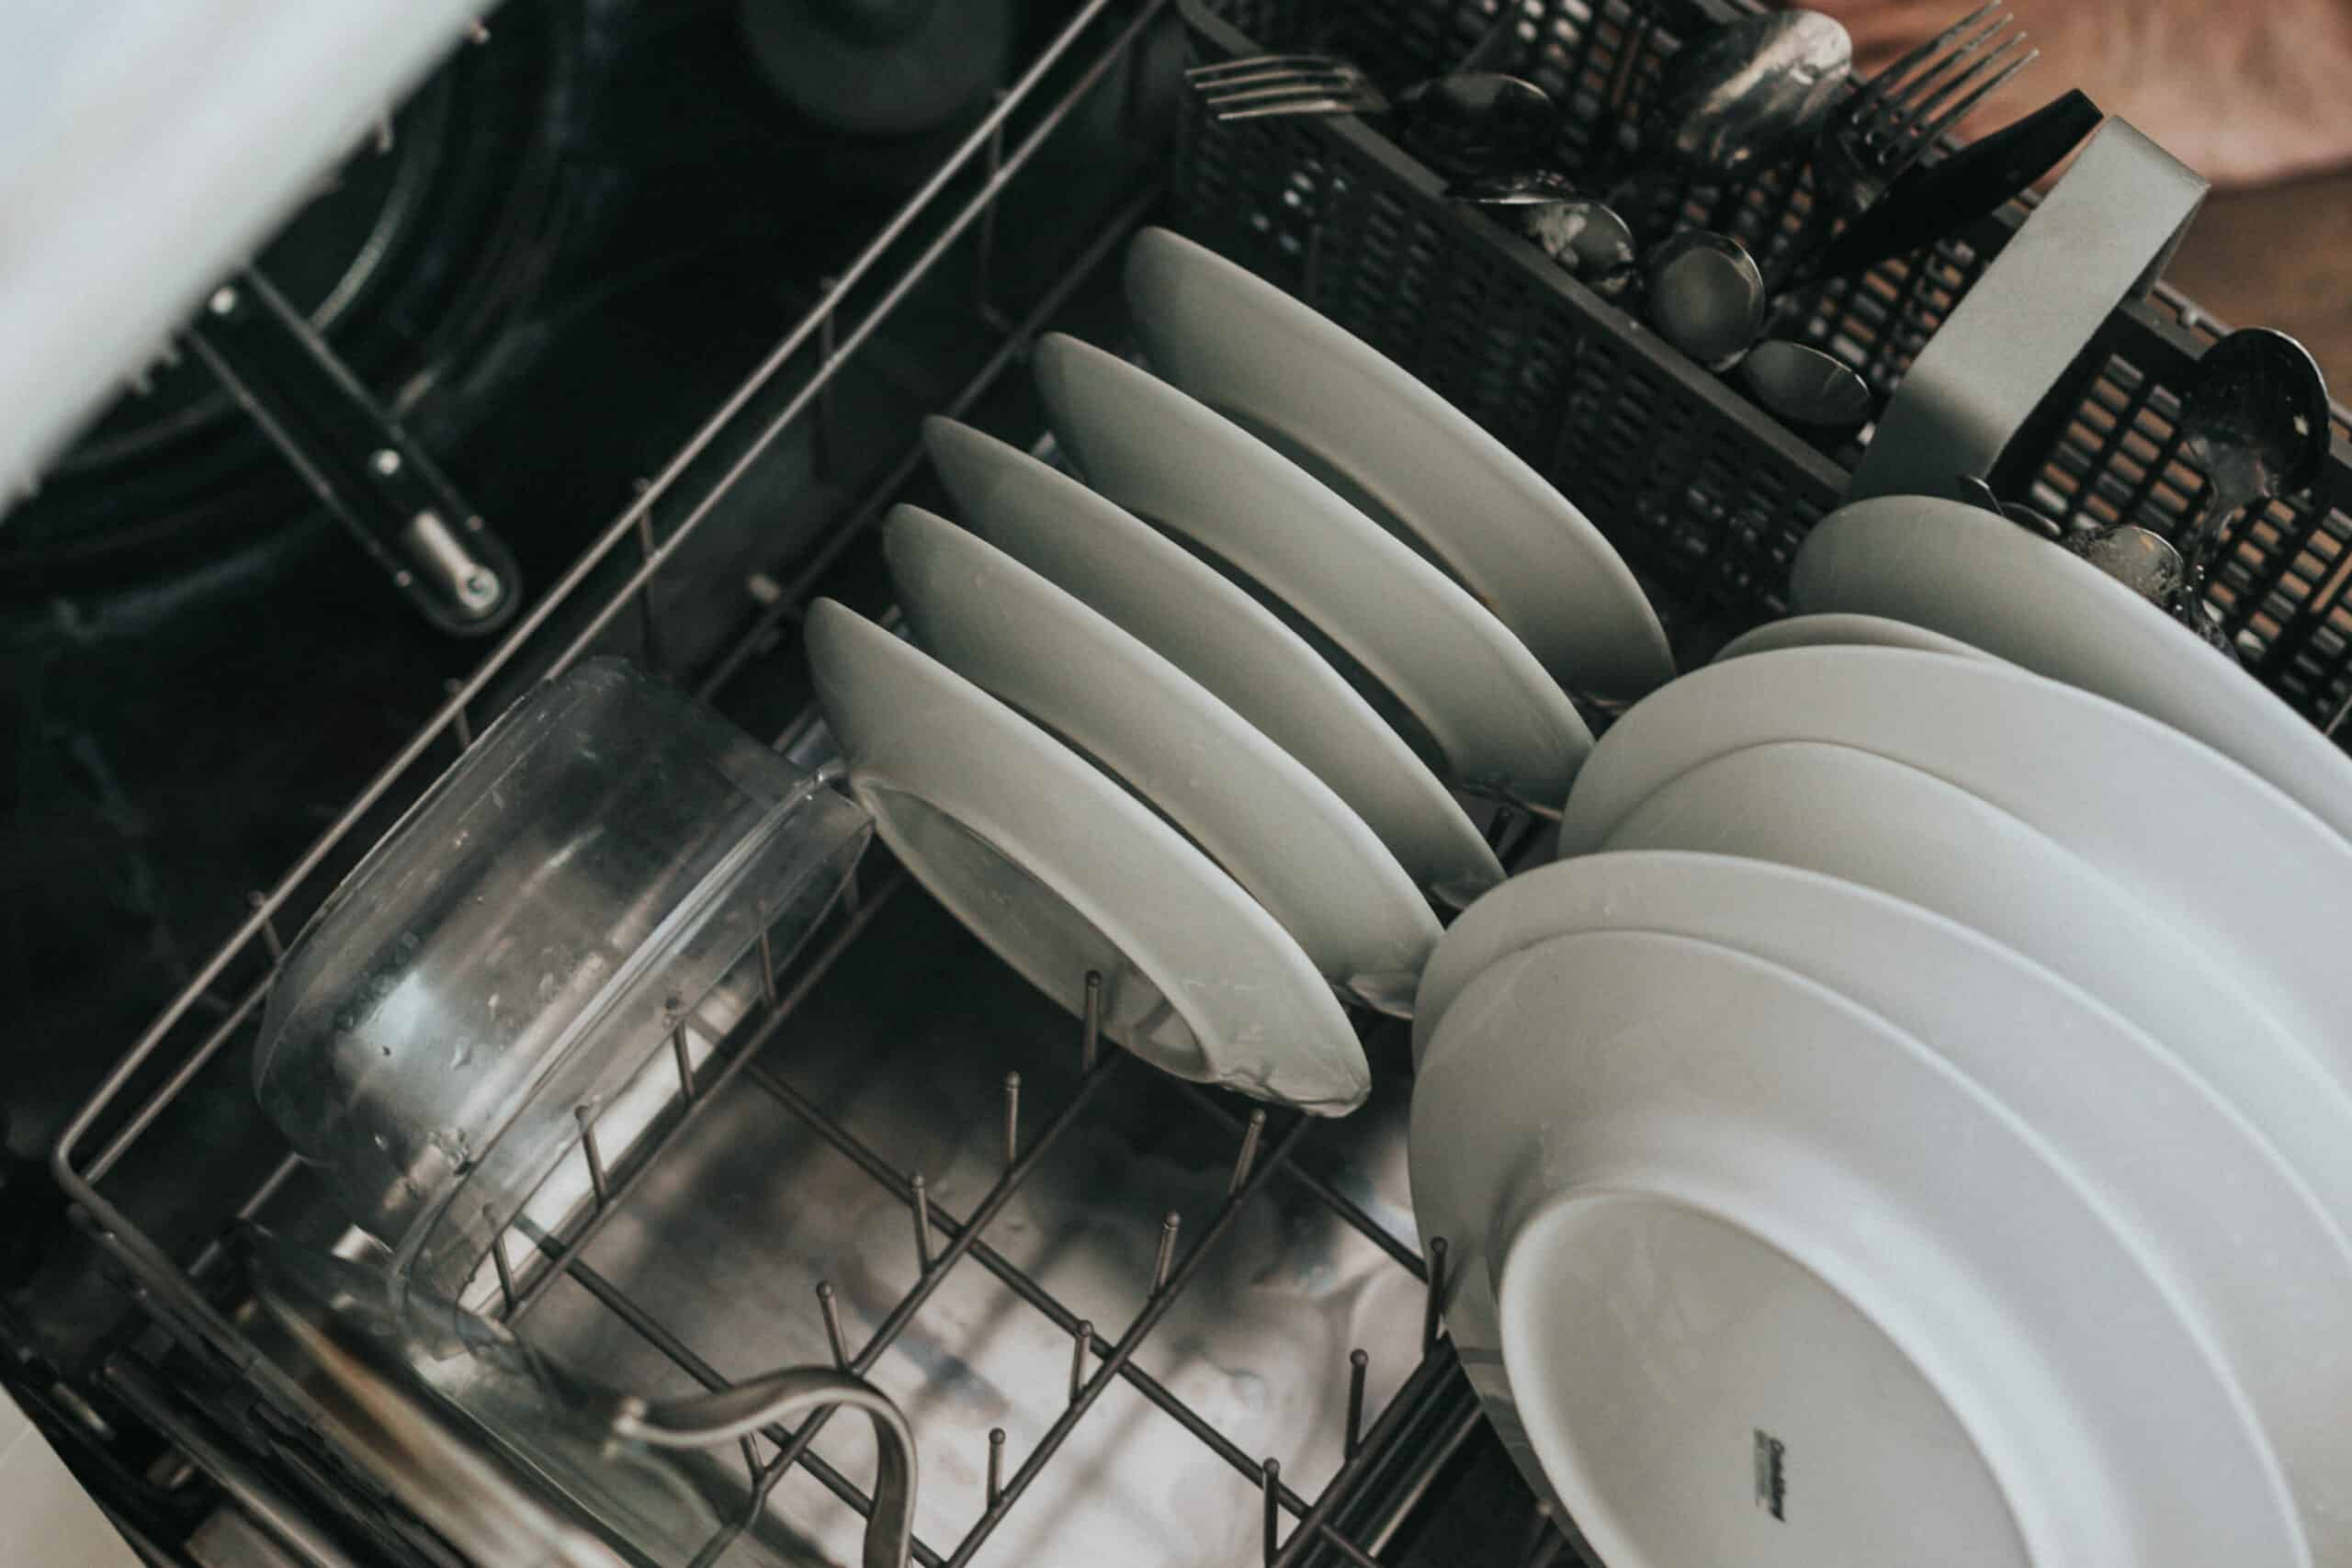 15 Best Eco Dishwasher Detergent for 2023